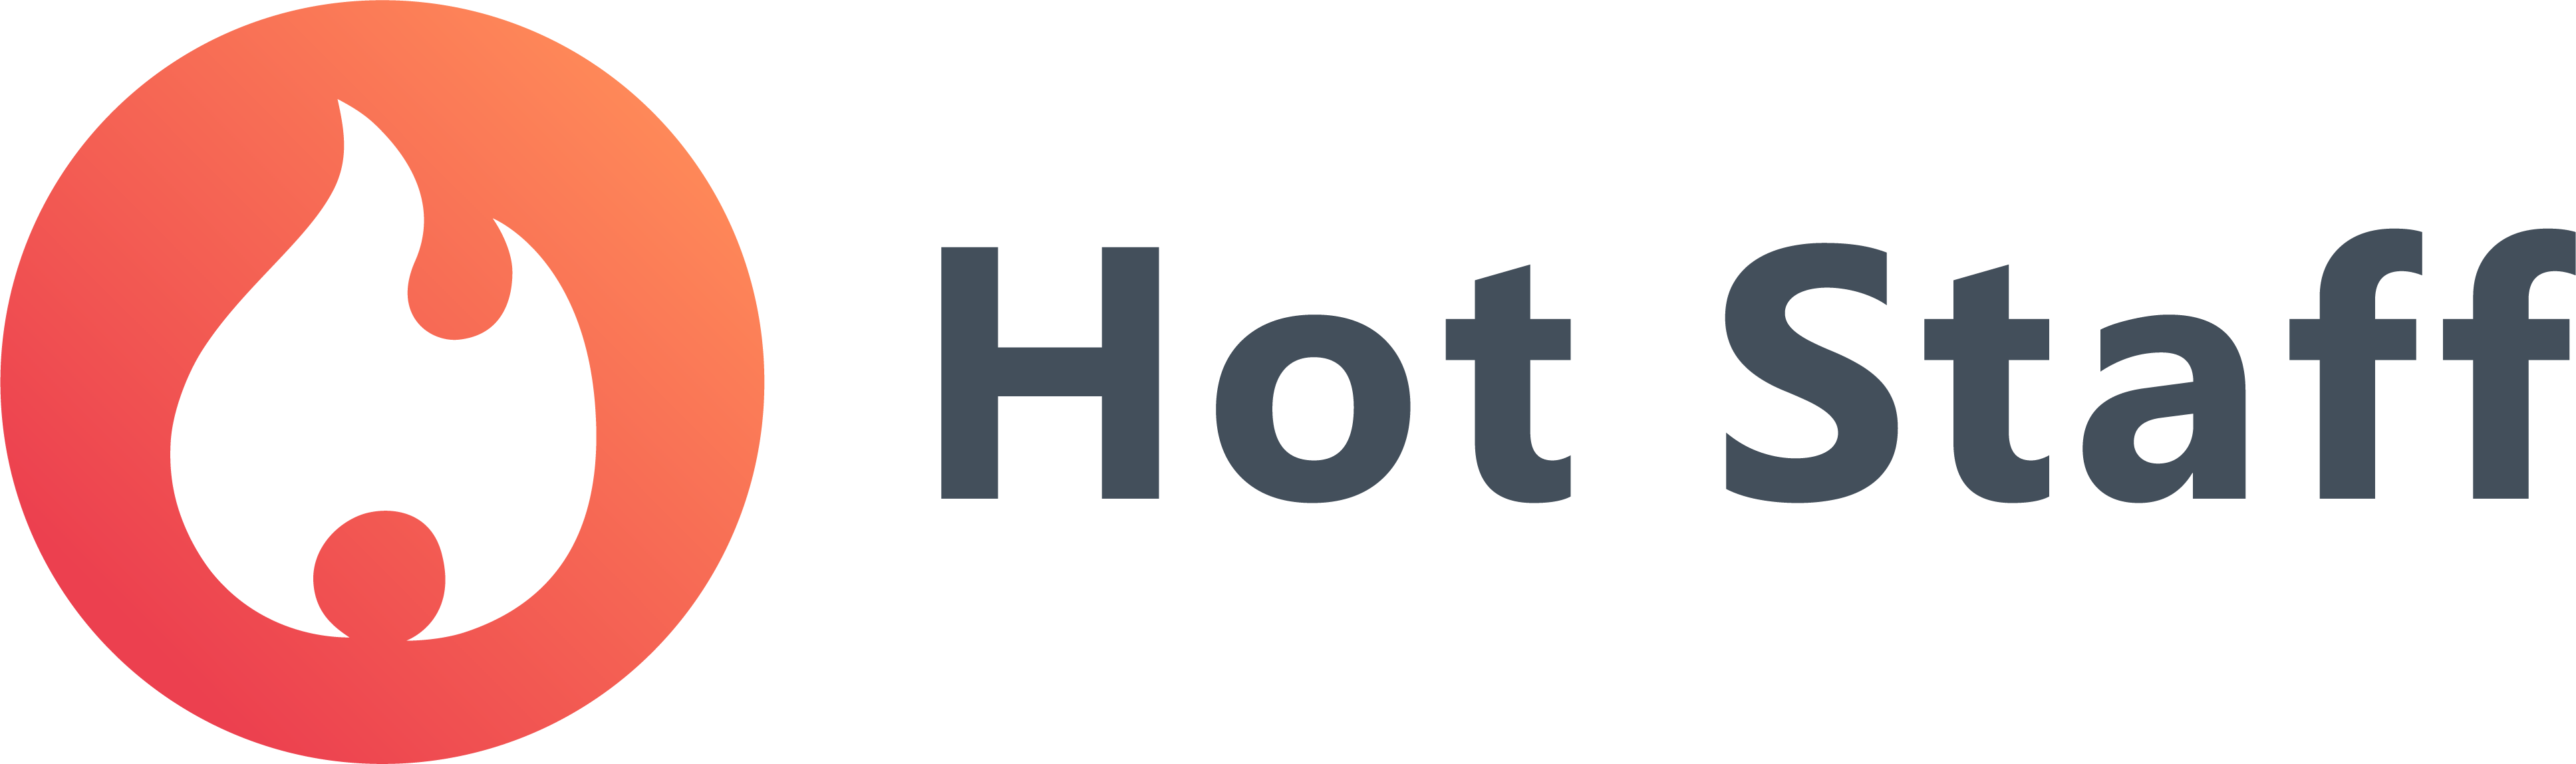 HotStaff - Город Москва logo2.png